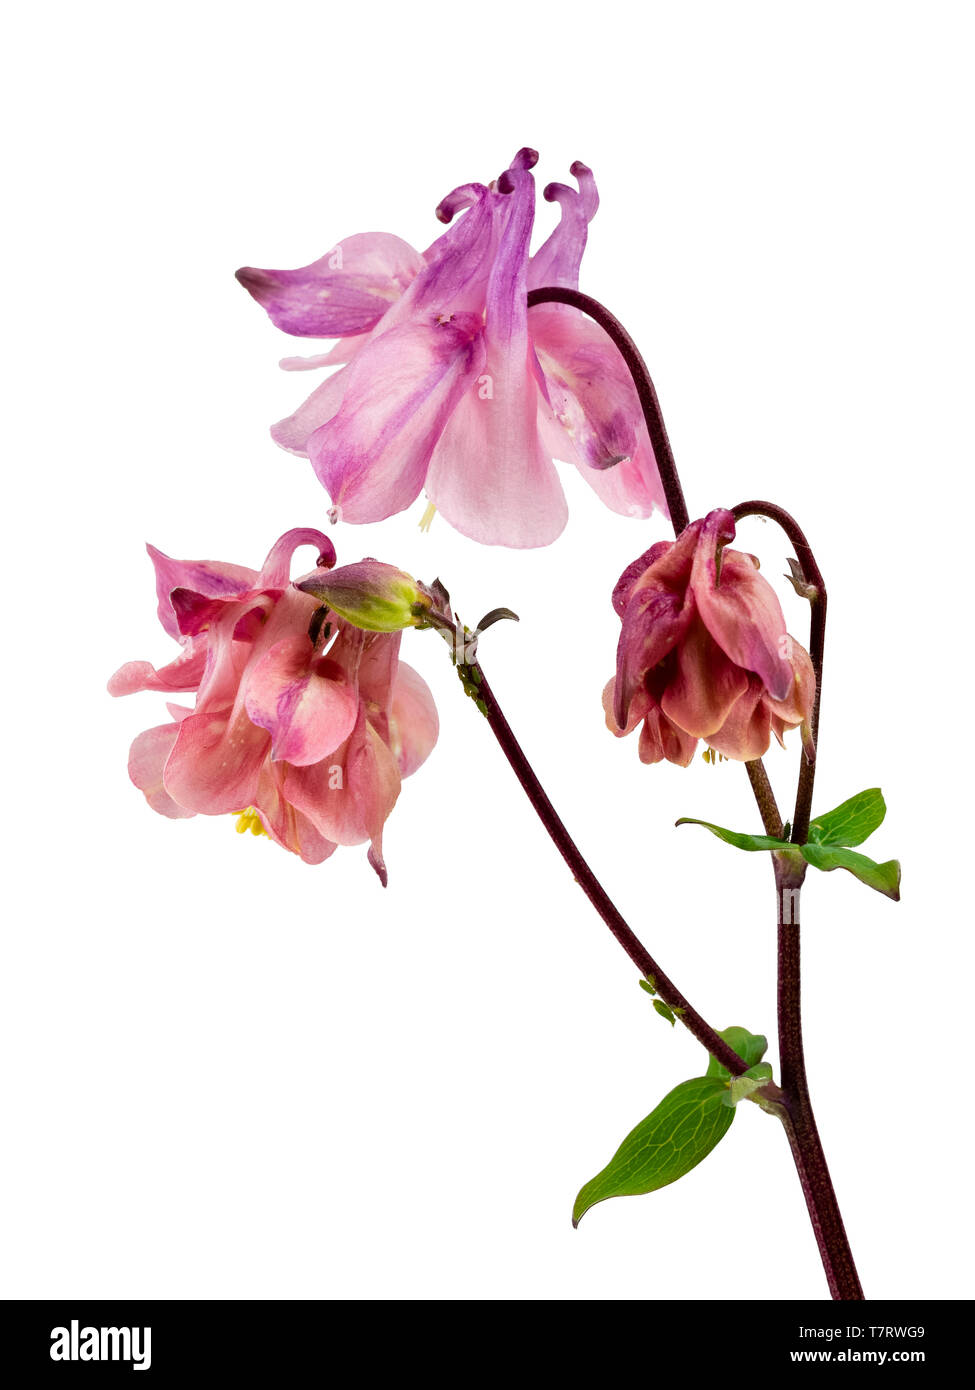 Pink, self seeded columbine, Aquilegia vulgaris hybrid on a white background Stock Photo